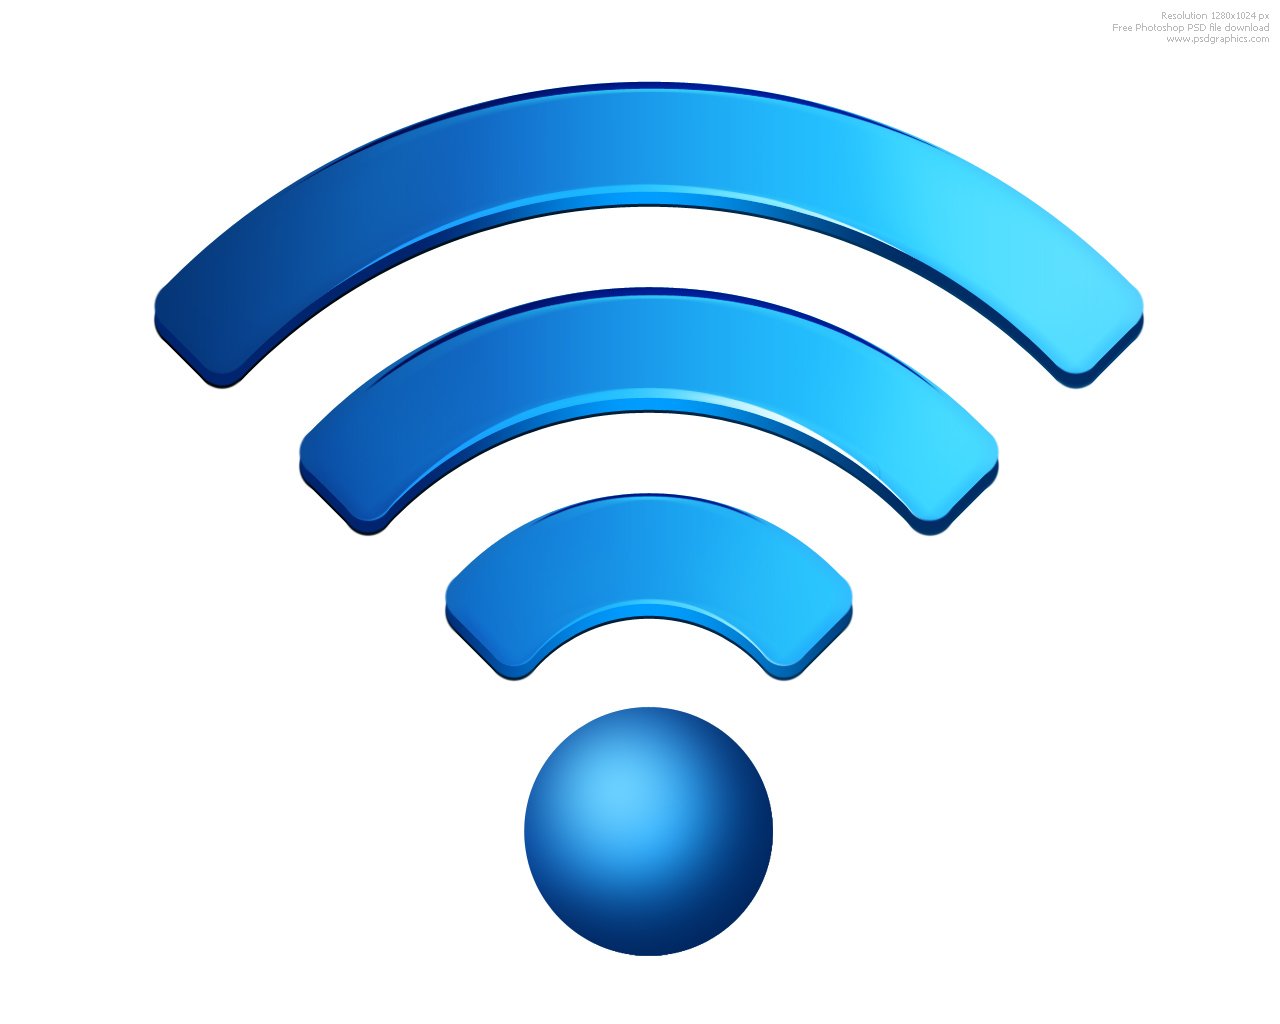 computer network logo png